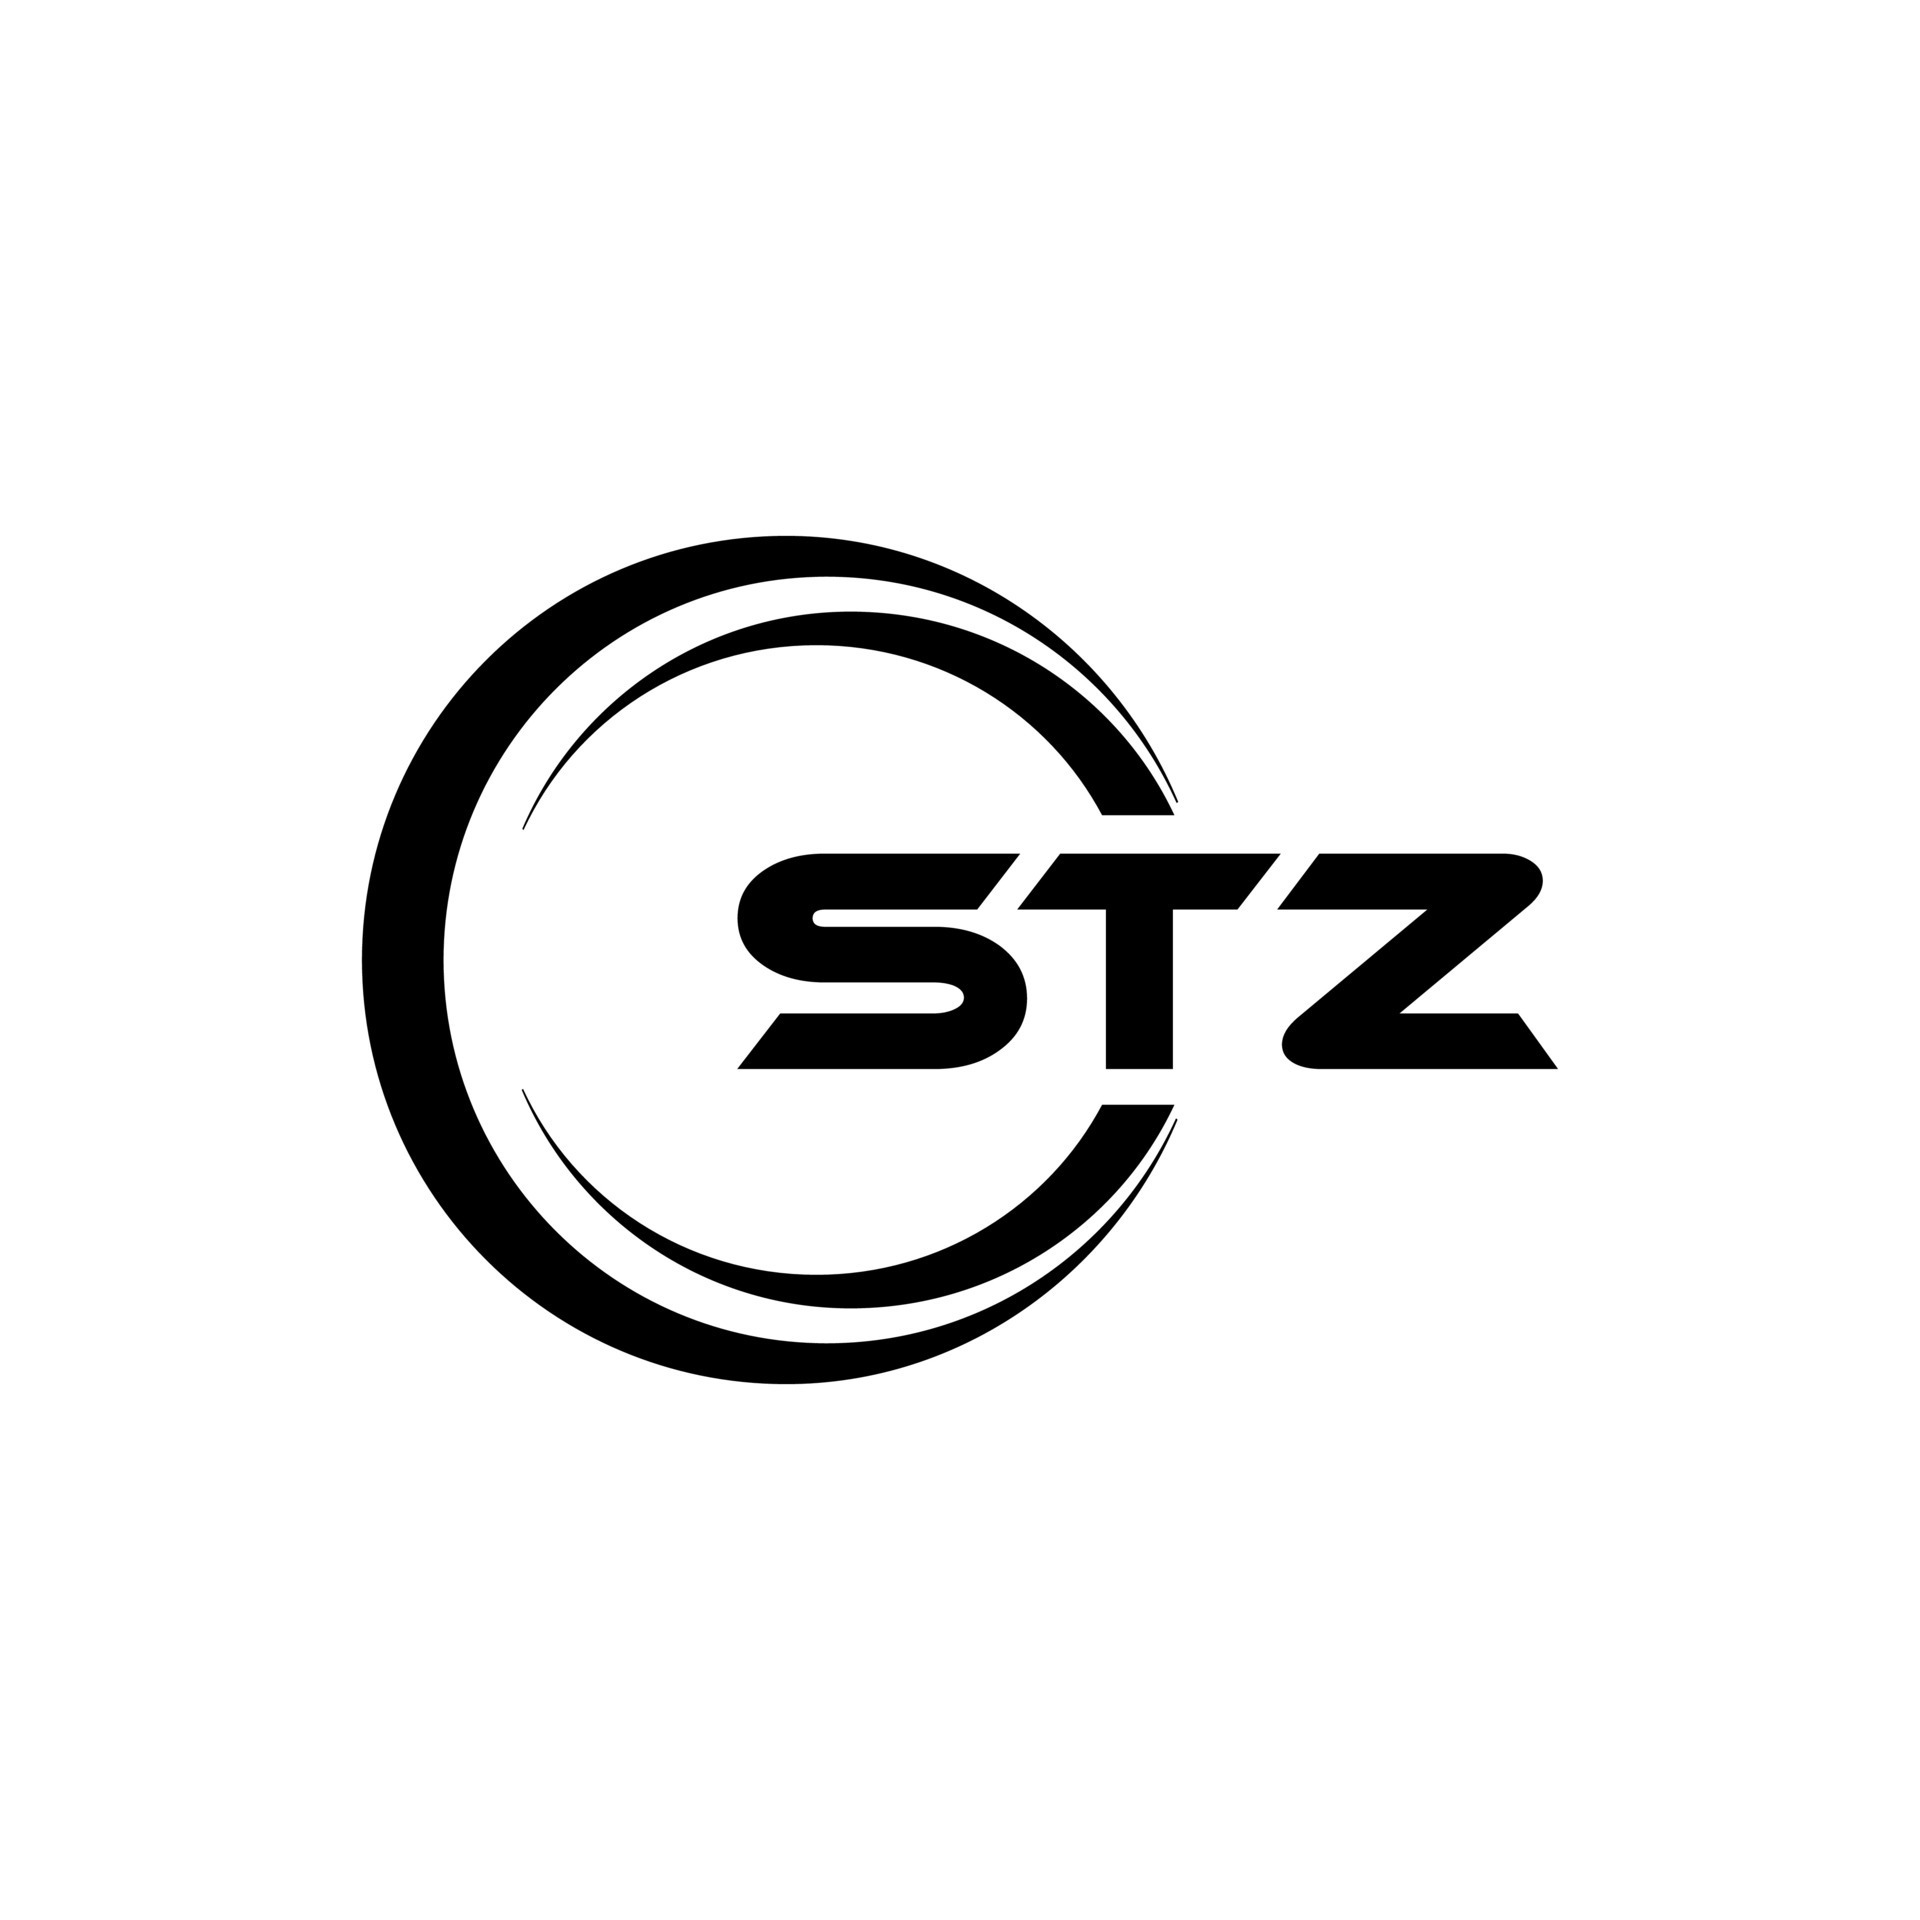 STZ Logo Design, Inspiration for a Unique Identity. Modern Elegance and ...